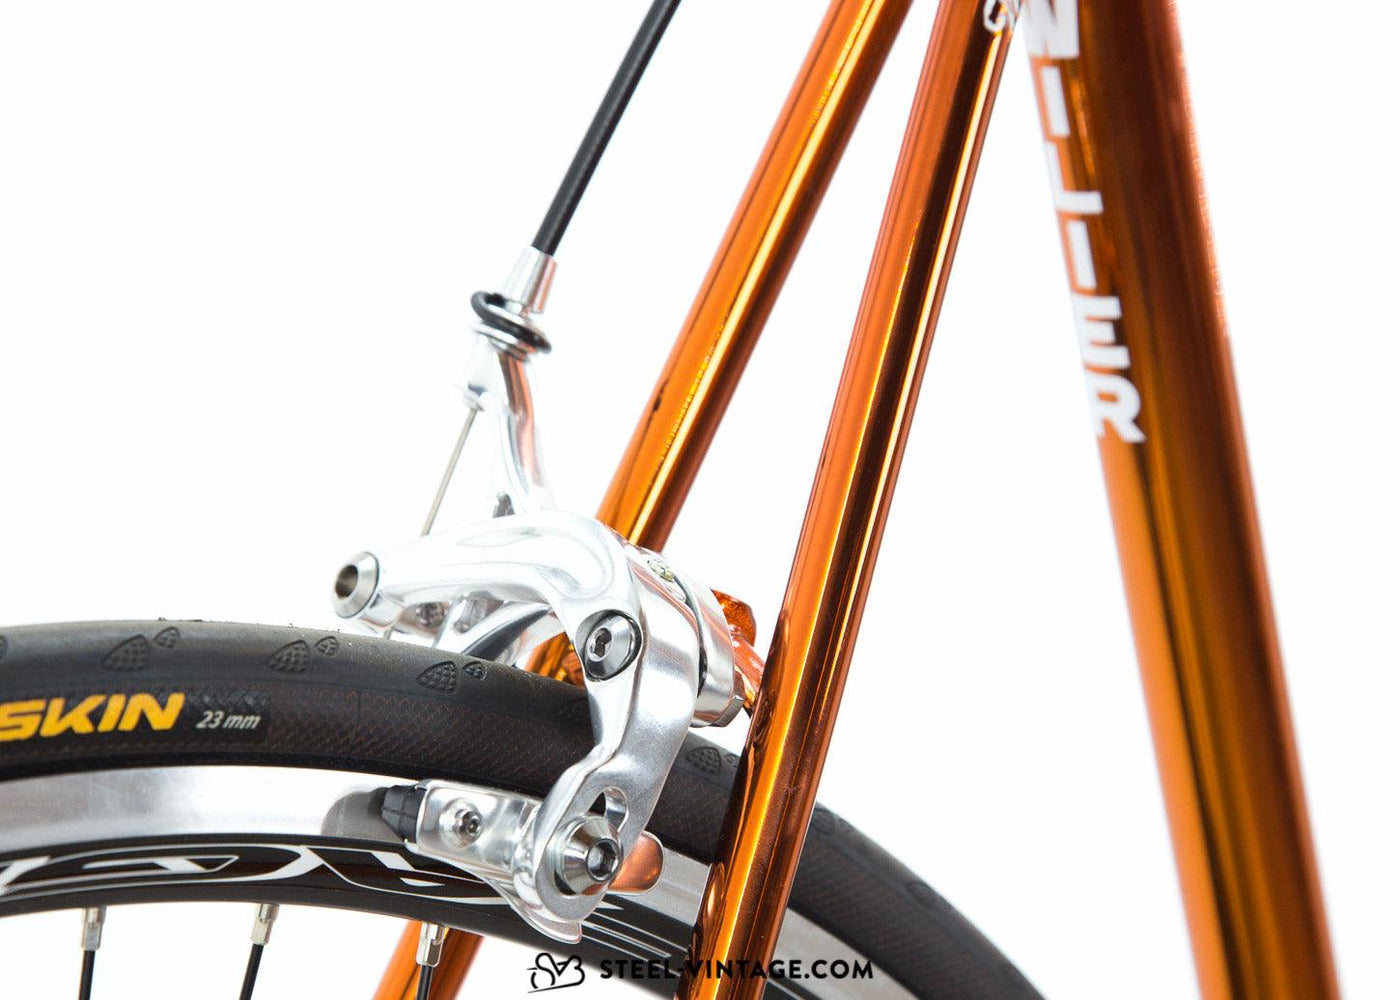 Wilier Triestina Neo Retro Road Bike Campagnolo Centaur 11s | Steel Vintage Bikes